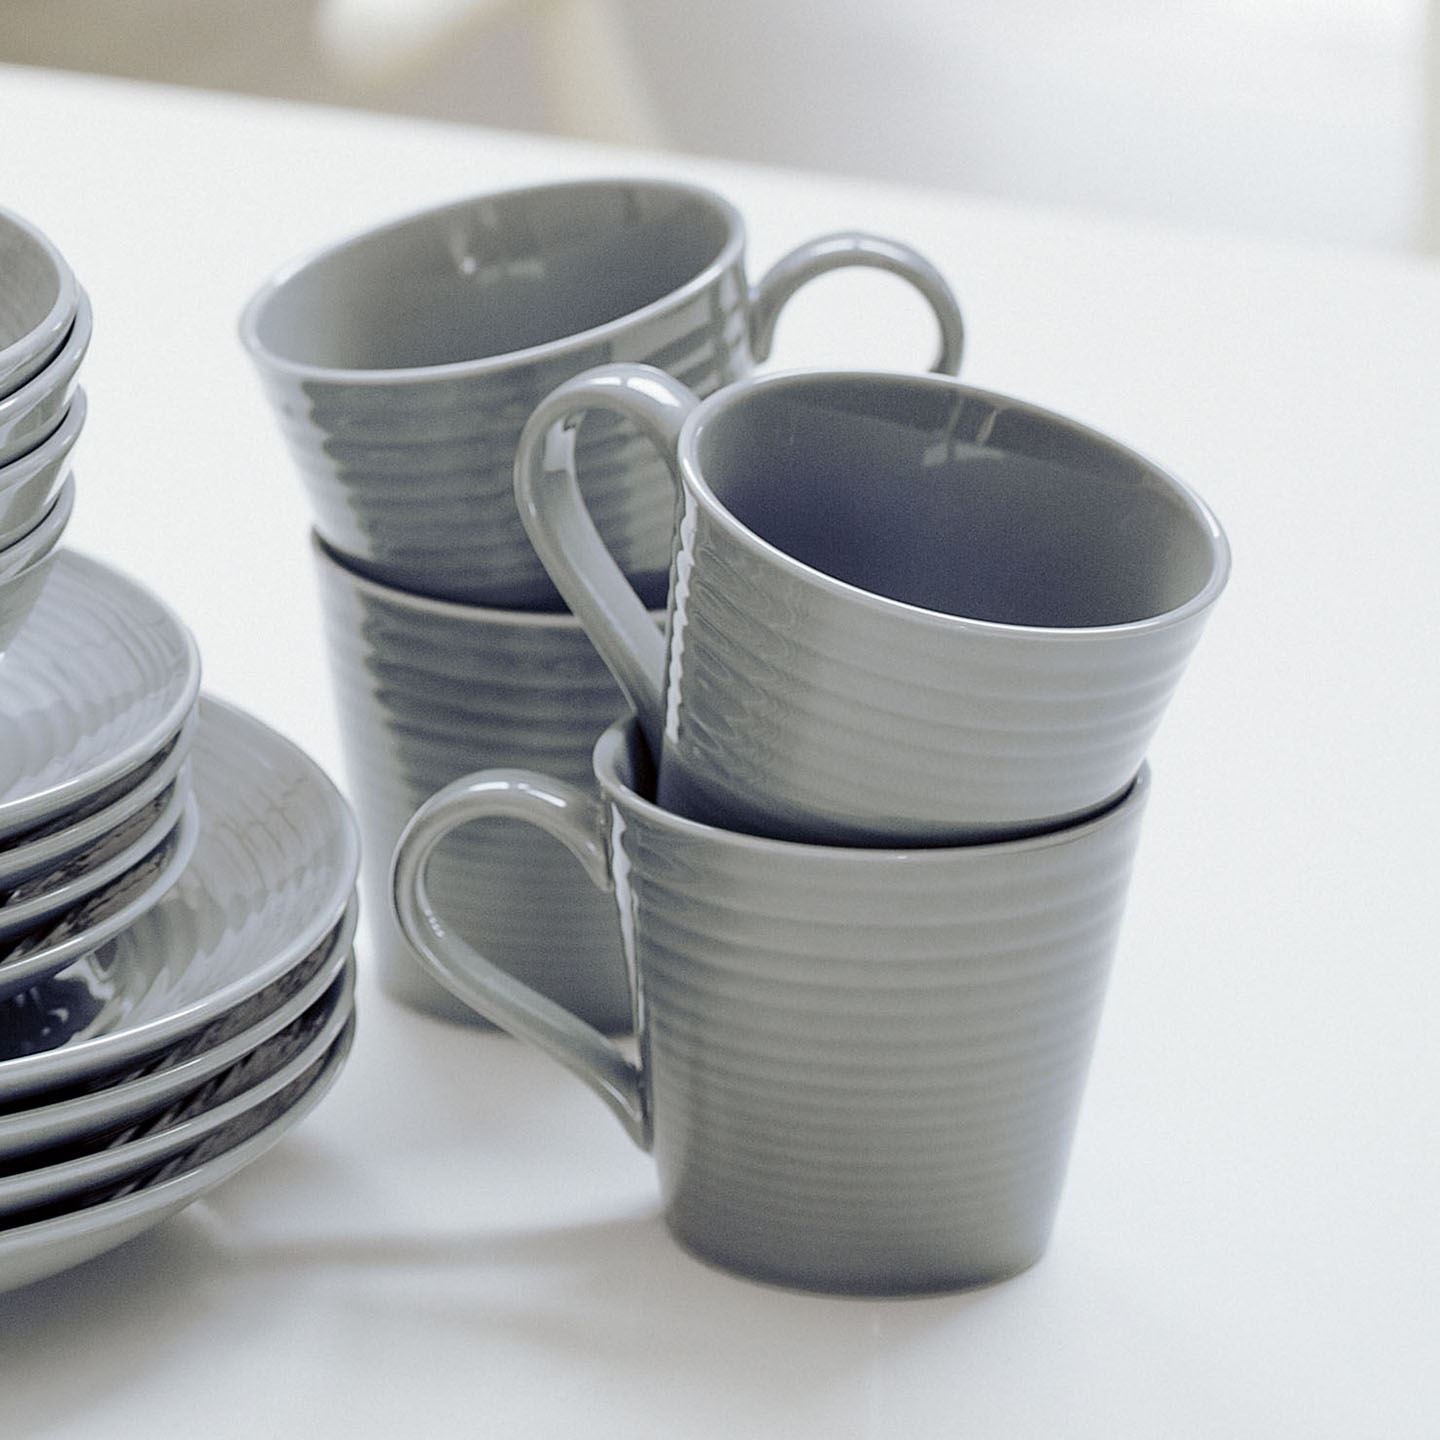 Royal Doulton Mugs including Royal Doulton tea cups